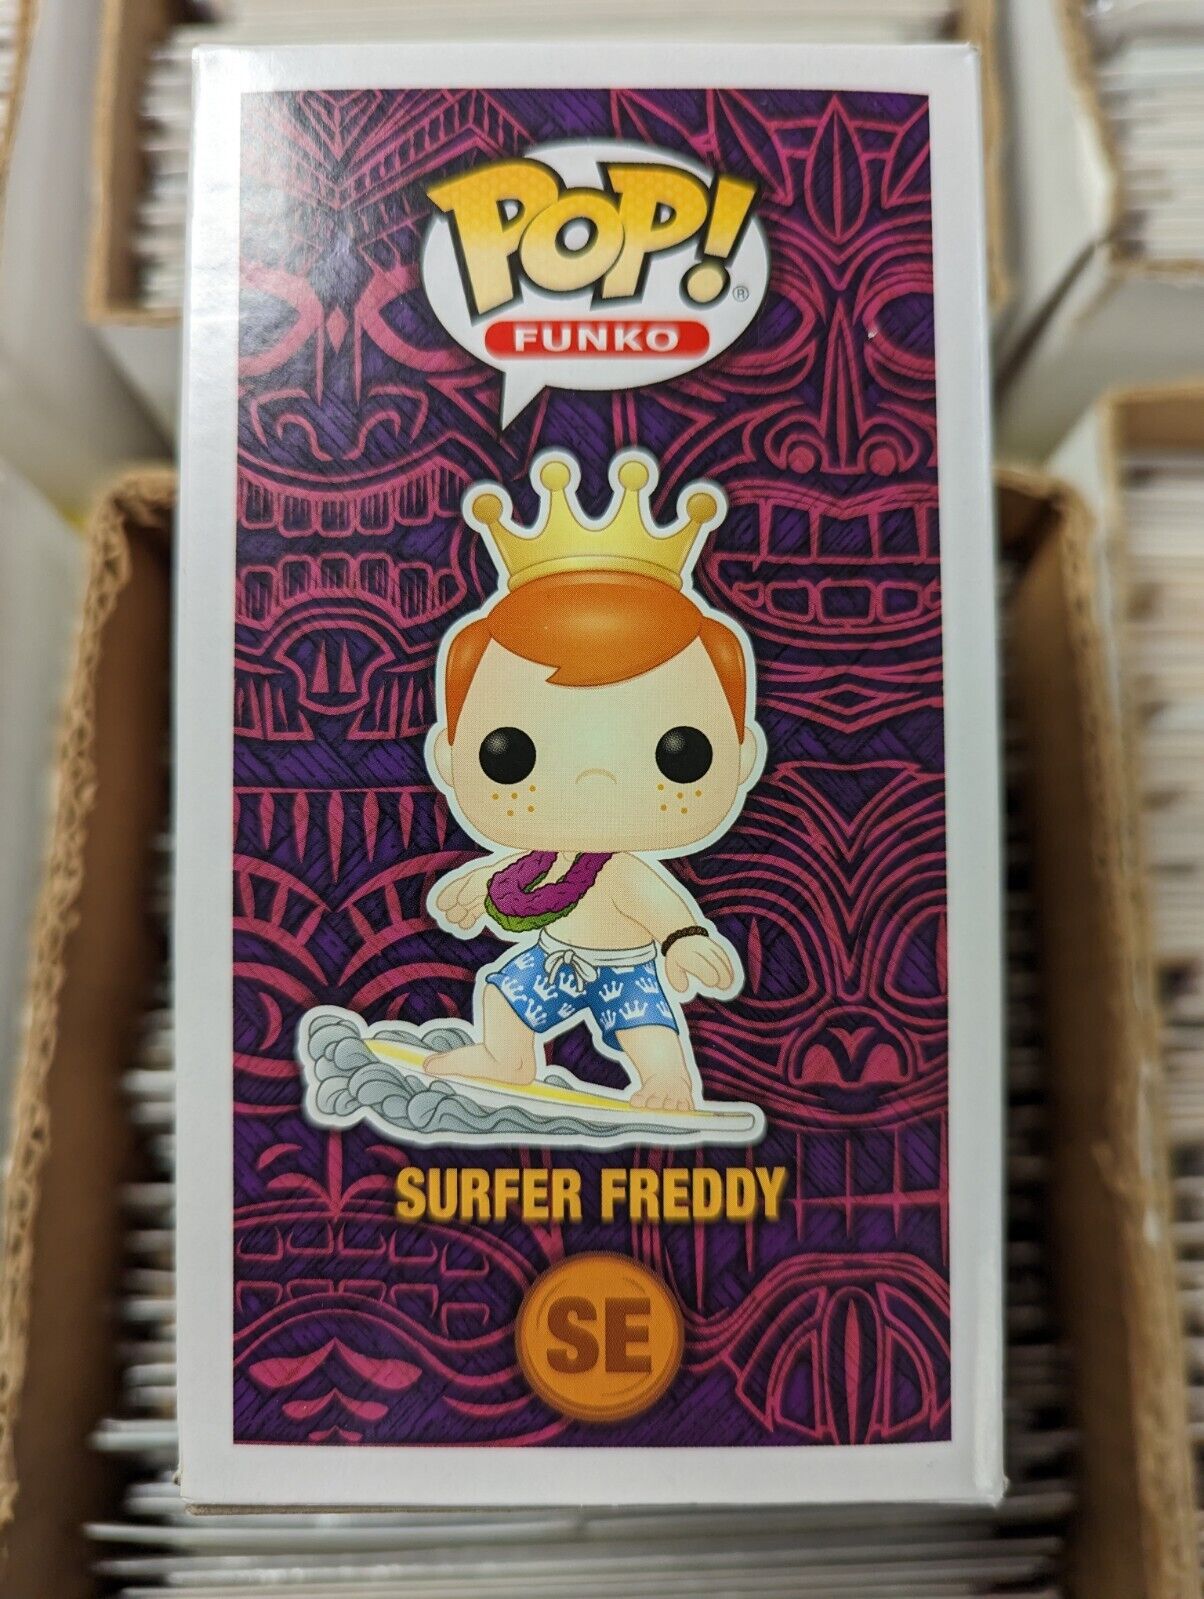 Funko Pop Surfer Freddy SE 2019 Box Of Fun 6000 Pcs